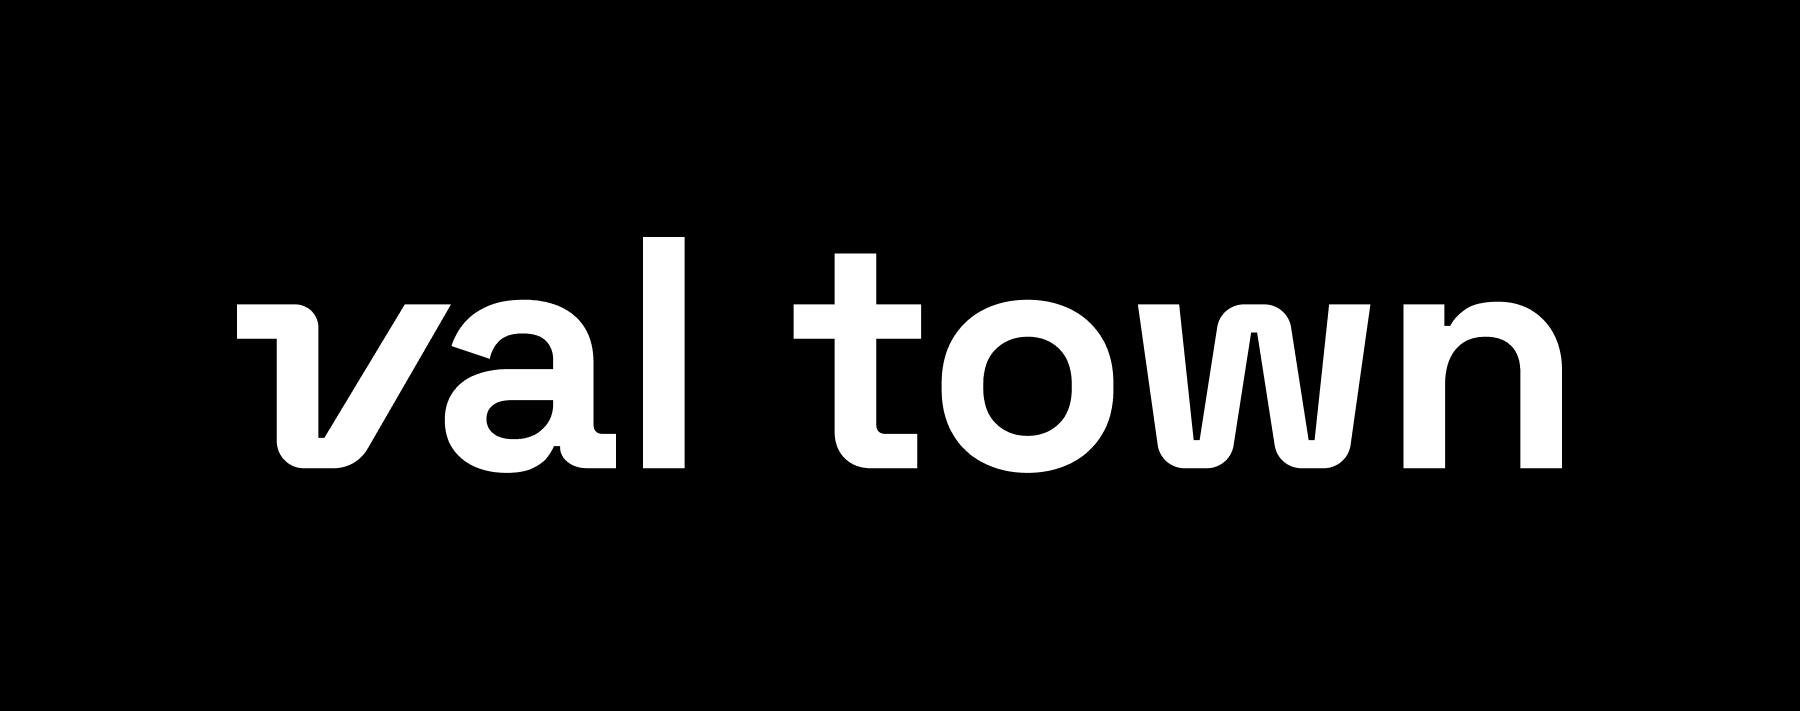 val town logotype on black